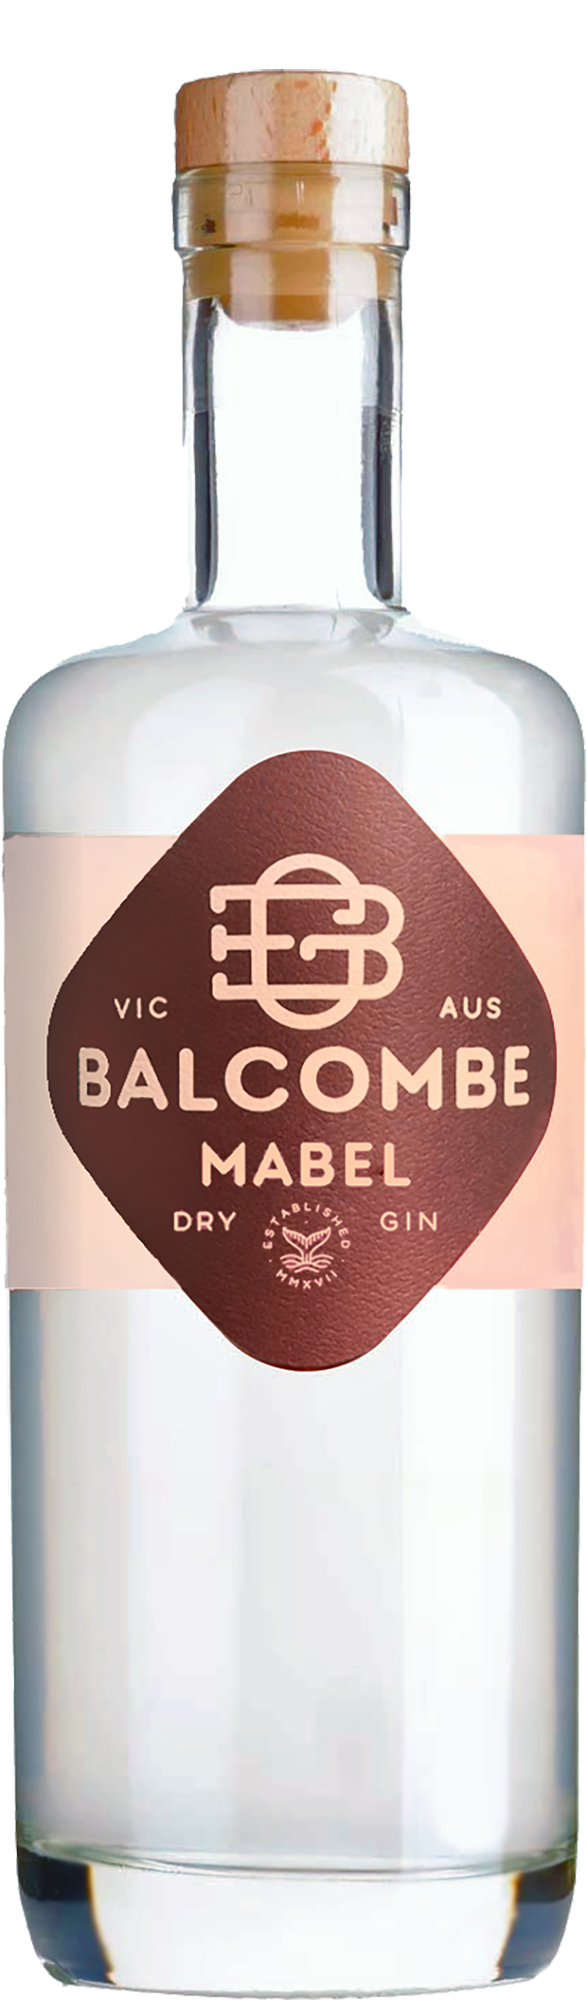 Balcombe Mabel Dry Gin